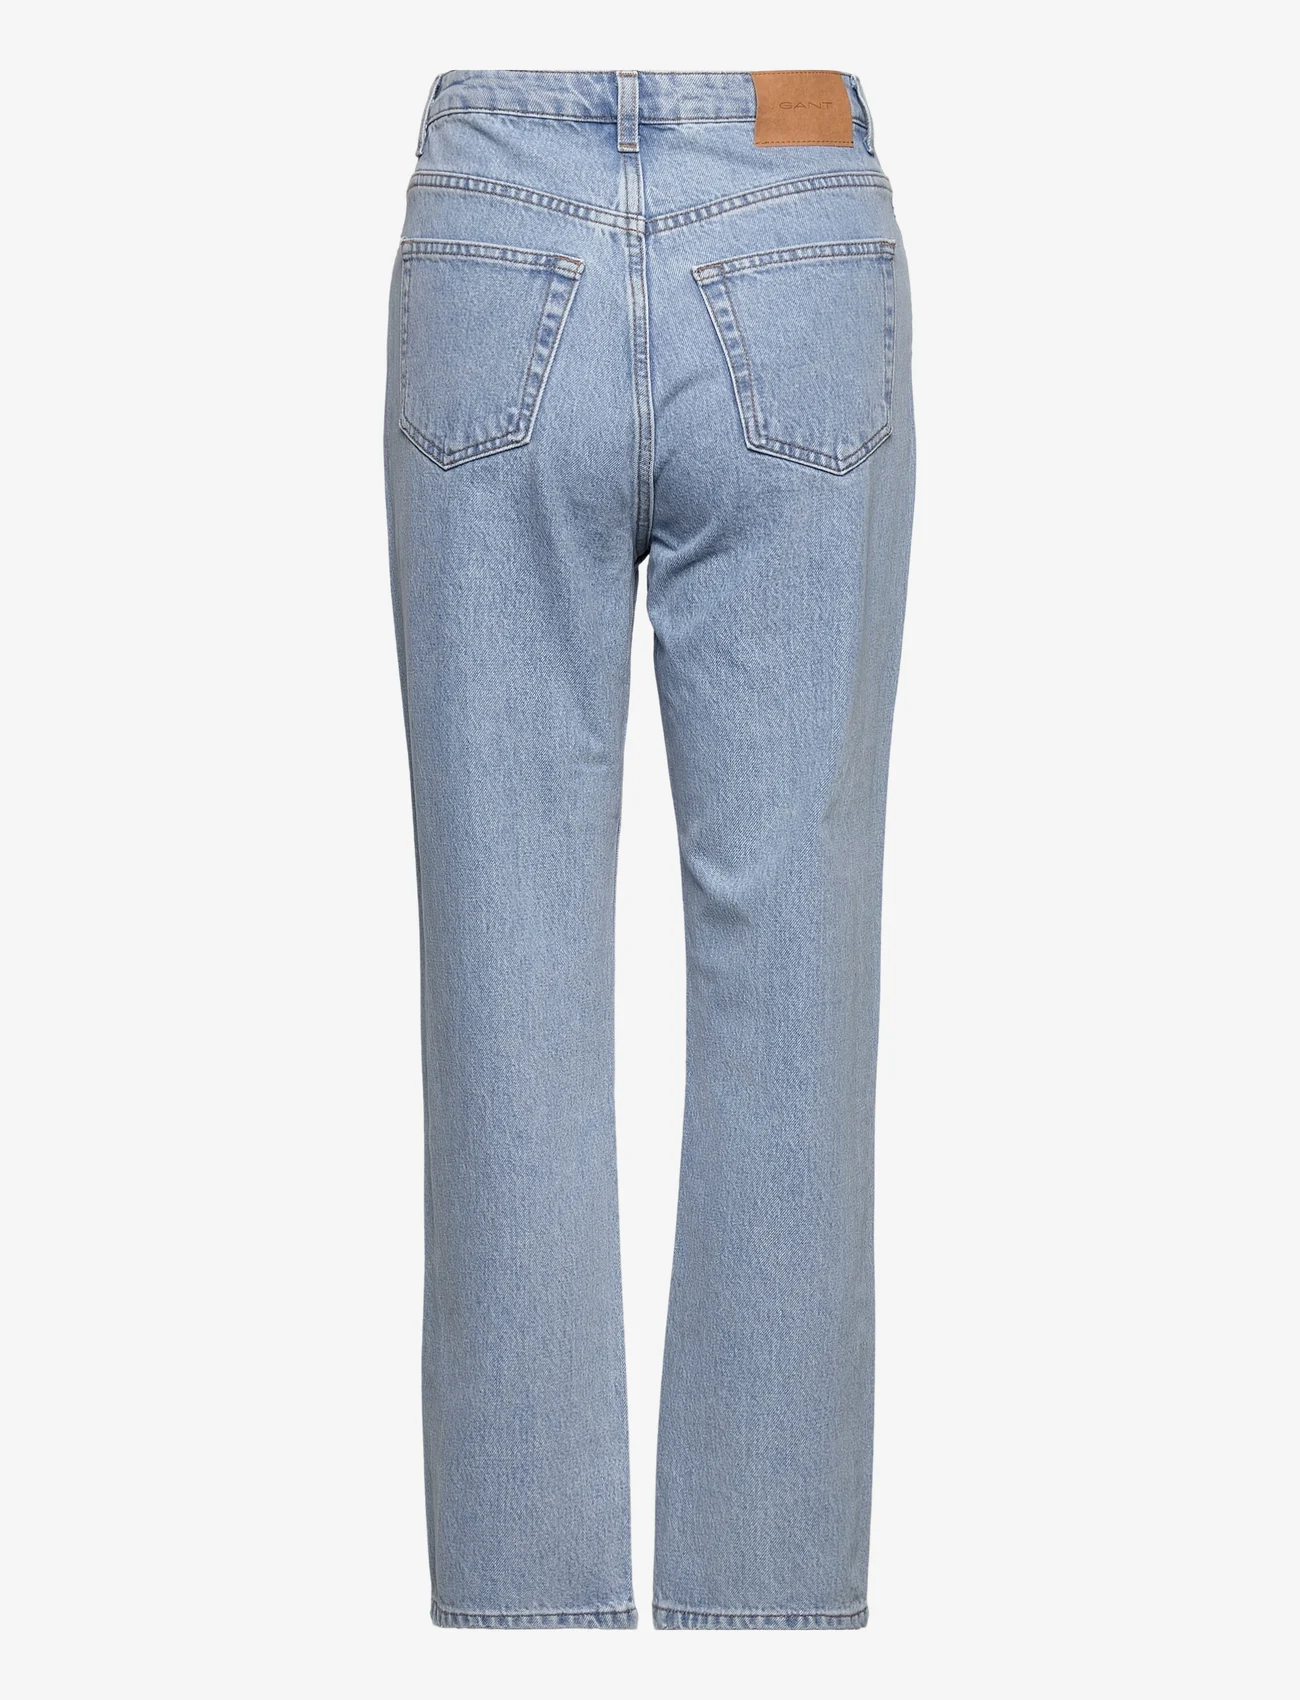 GANT - D1. STRAIGHT HW CROPPED JEANS - raka jeans - light blue vintage - 1